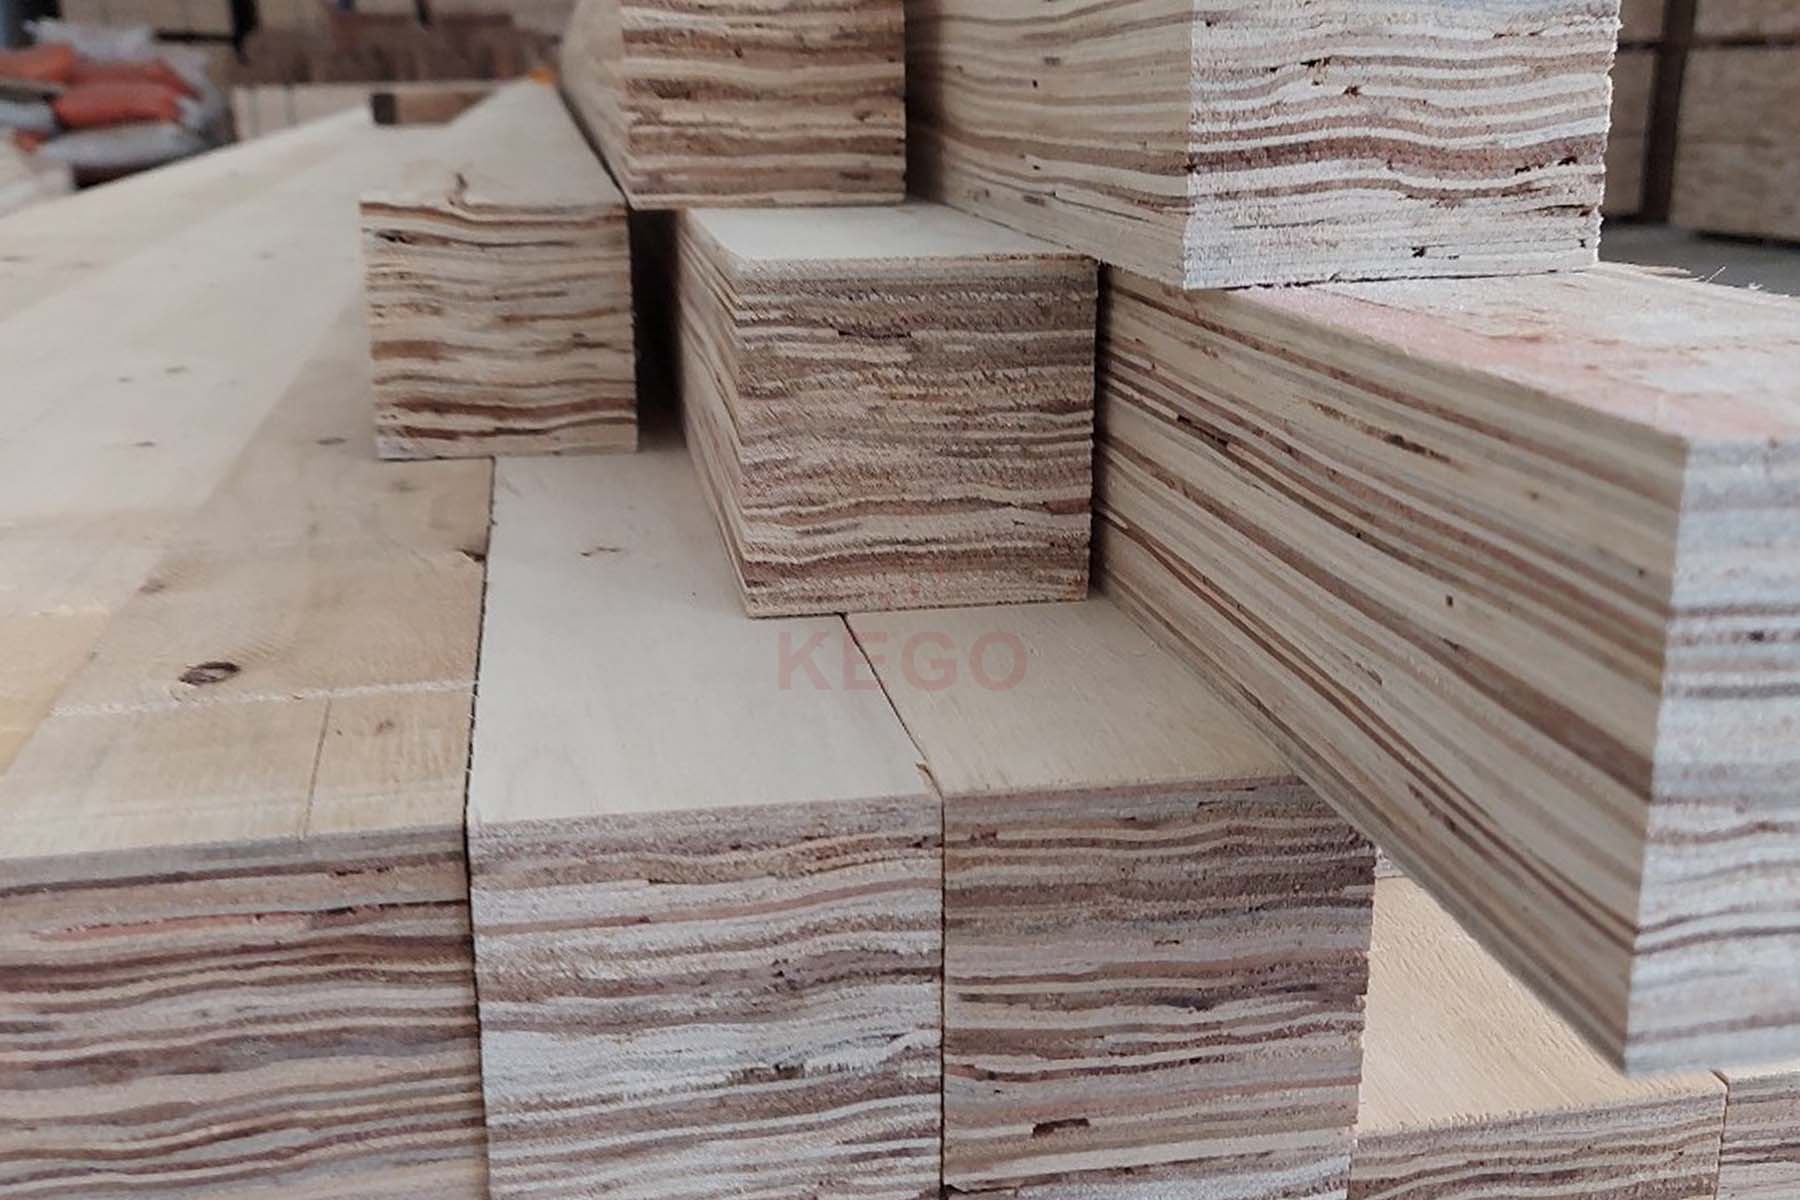 https://kego.com.vn/wp-content/uploads/2015/09/laminated-veneer-lumber-lvl-kego-11.jpg